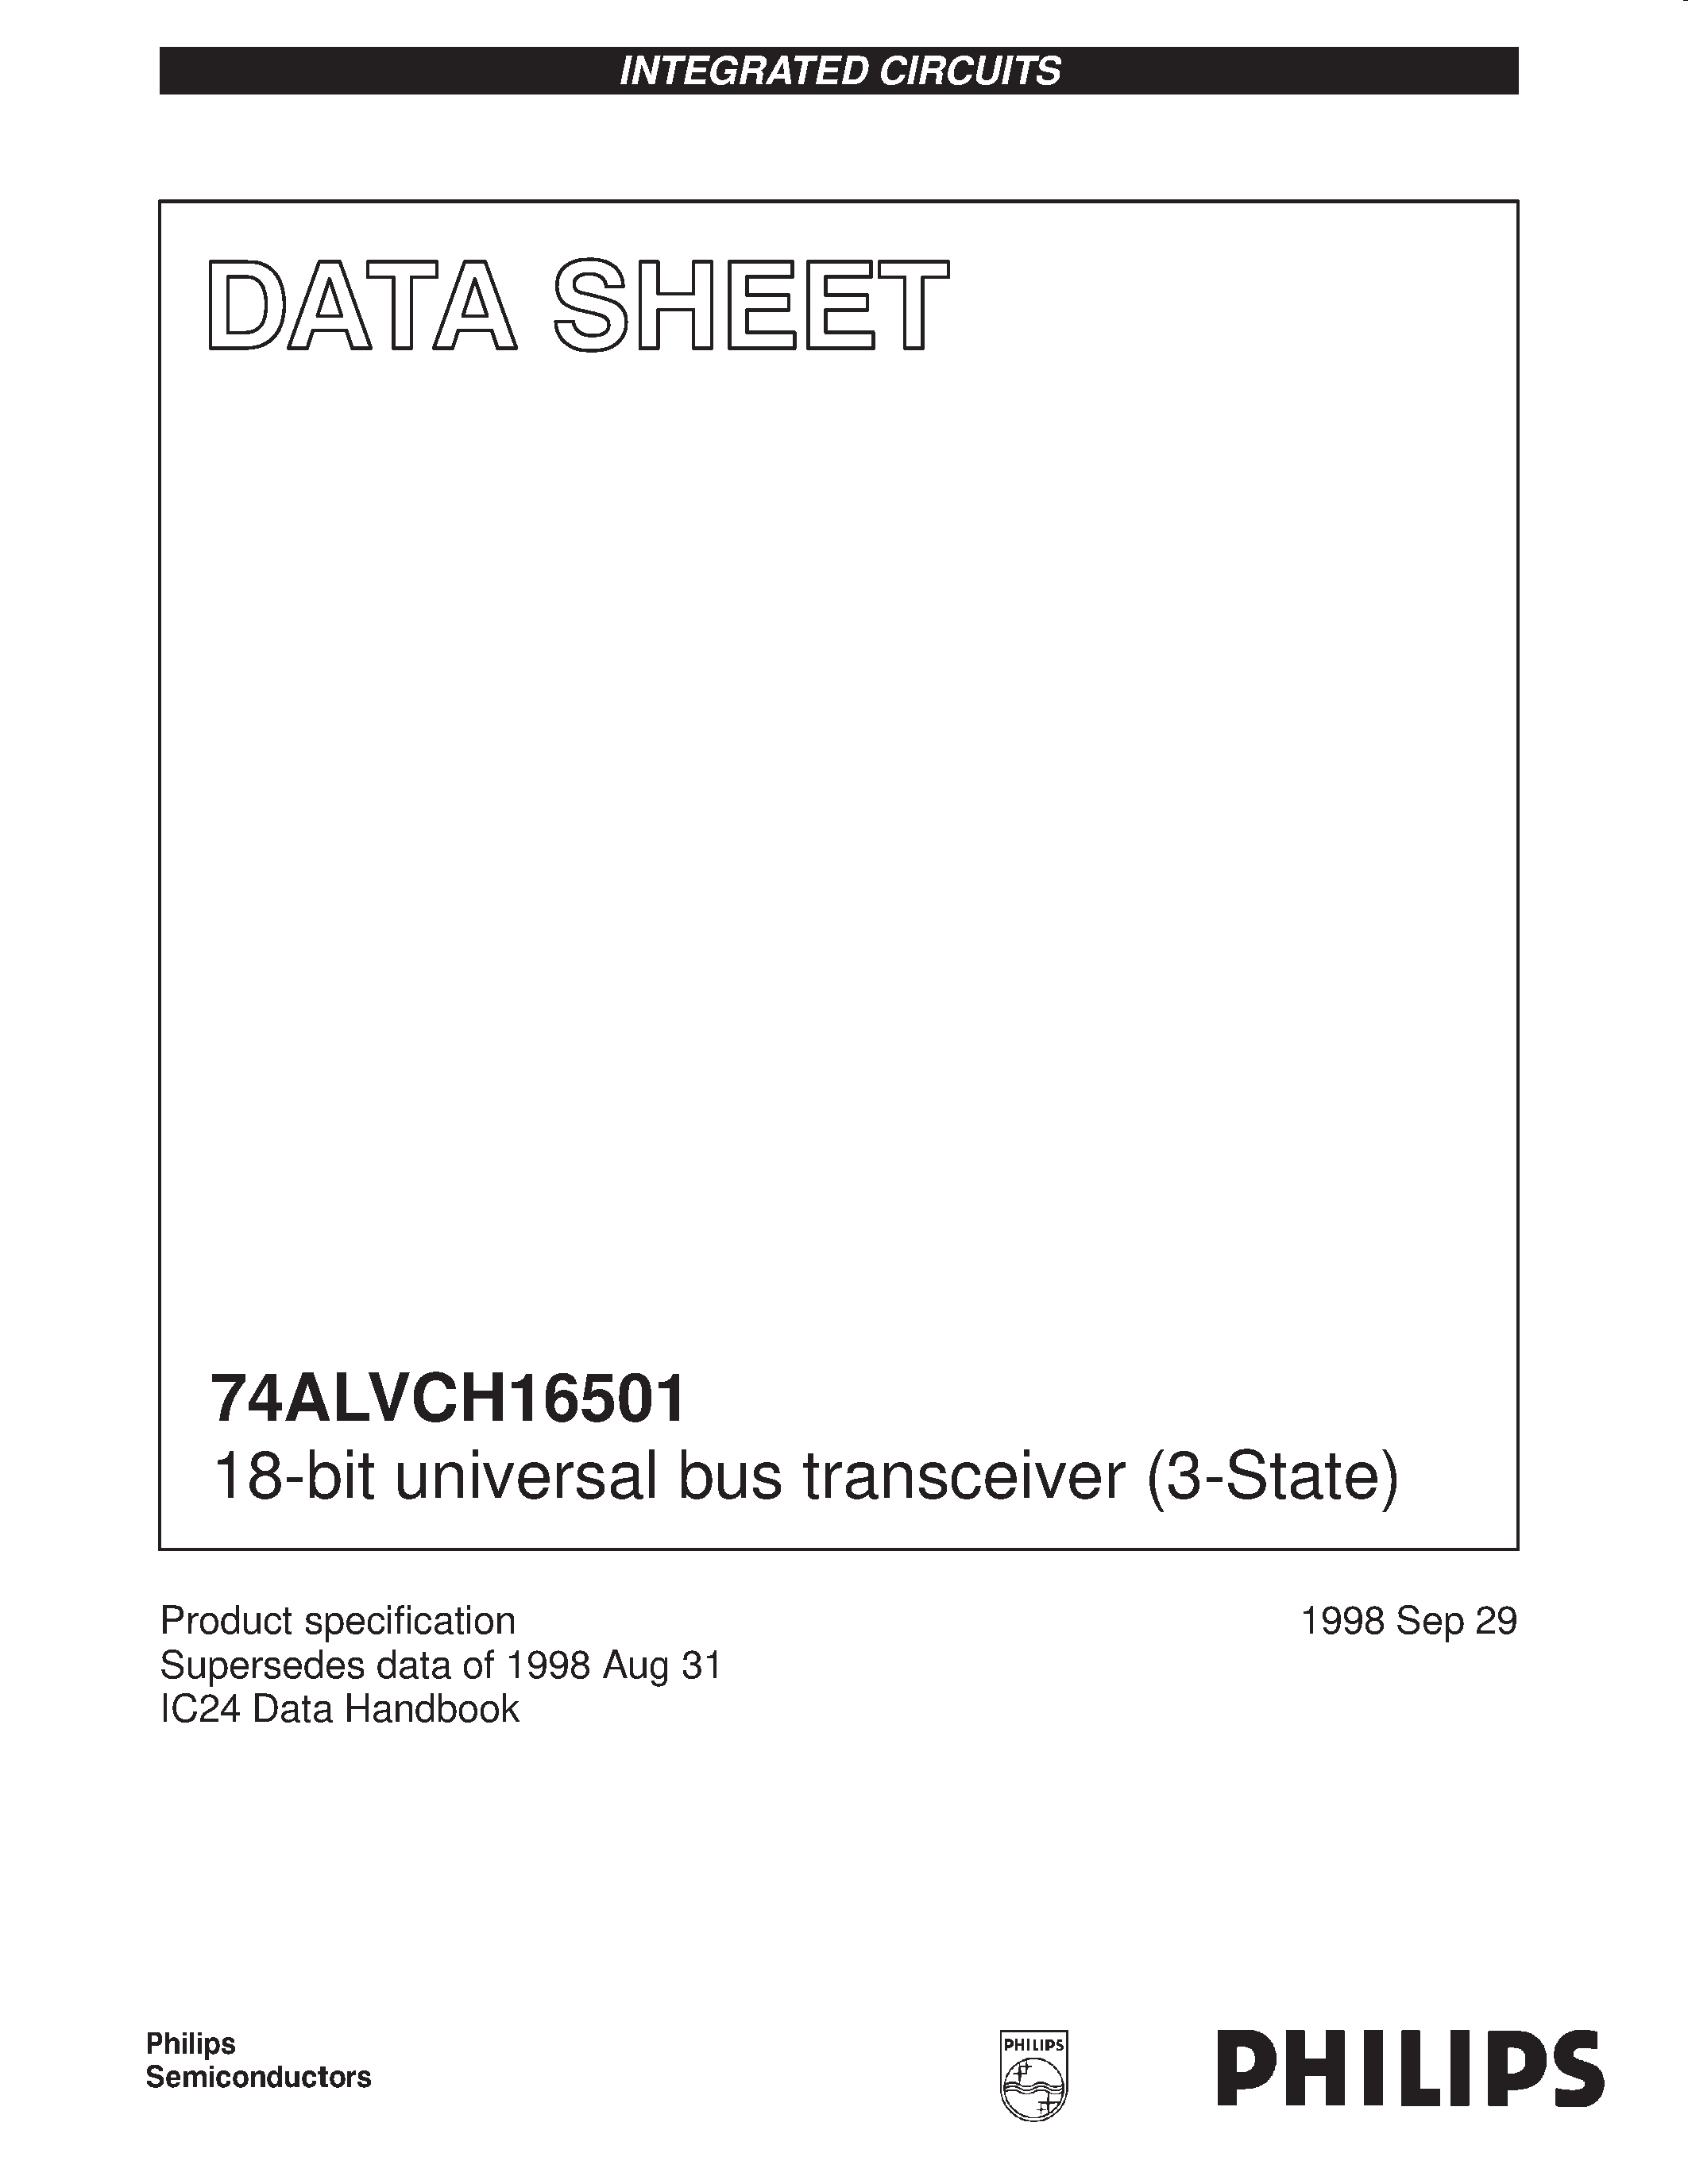 Datasheet 74ALVCH16501DGG - 18-bit universal bus transceiver 3-State page 1